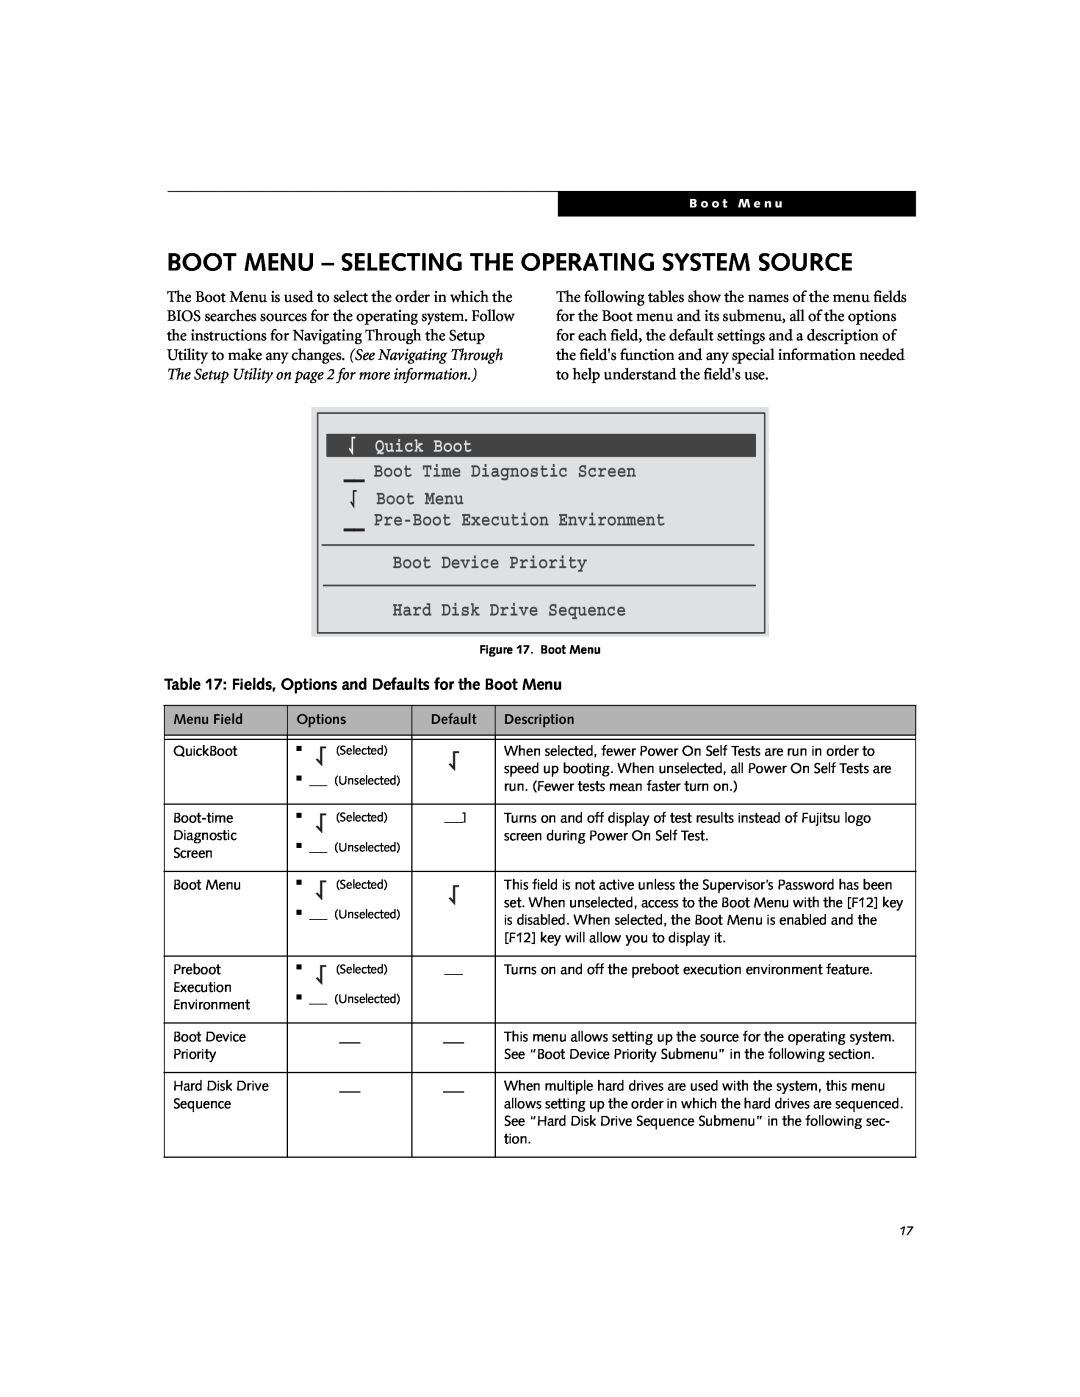 Fujitsu Siemens Computers N3510 manual Boot Menu - Selecting The Operating System Source, Quick Boot 